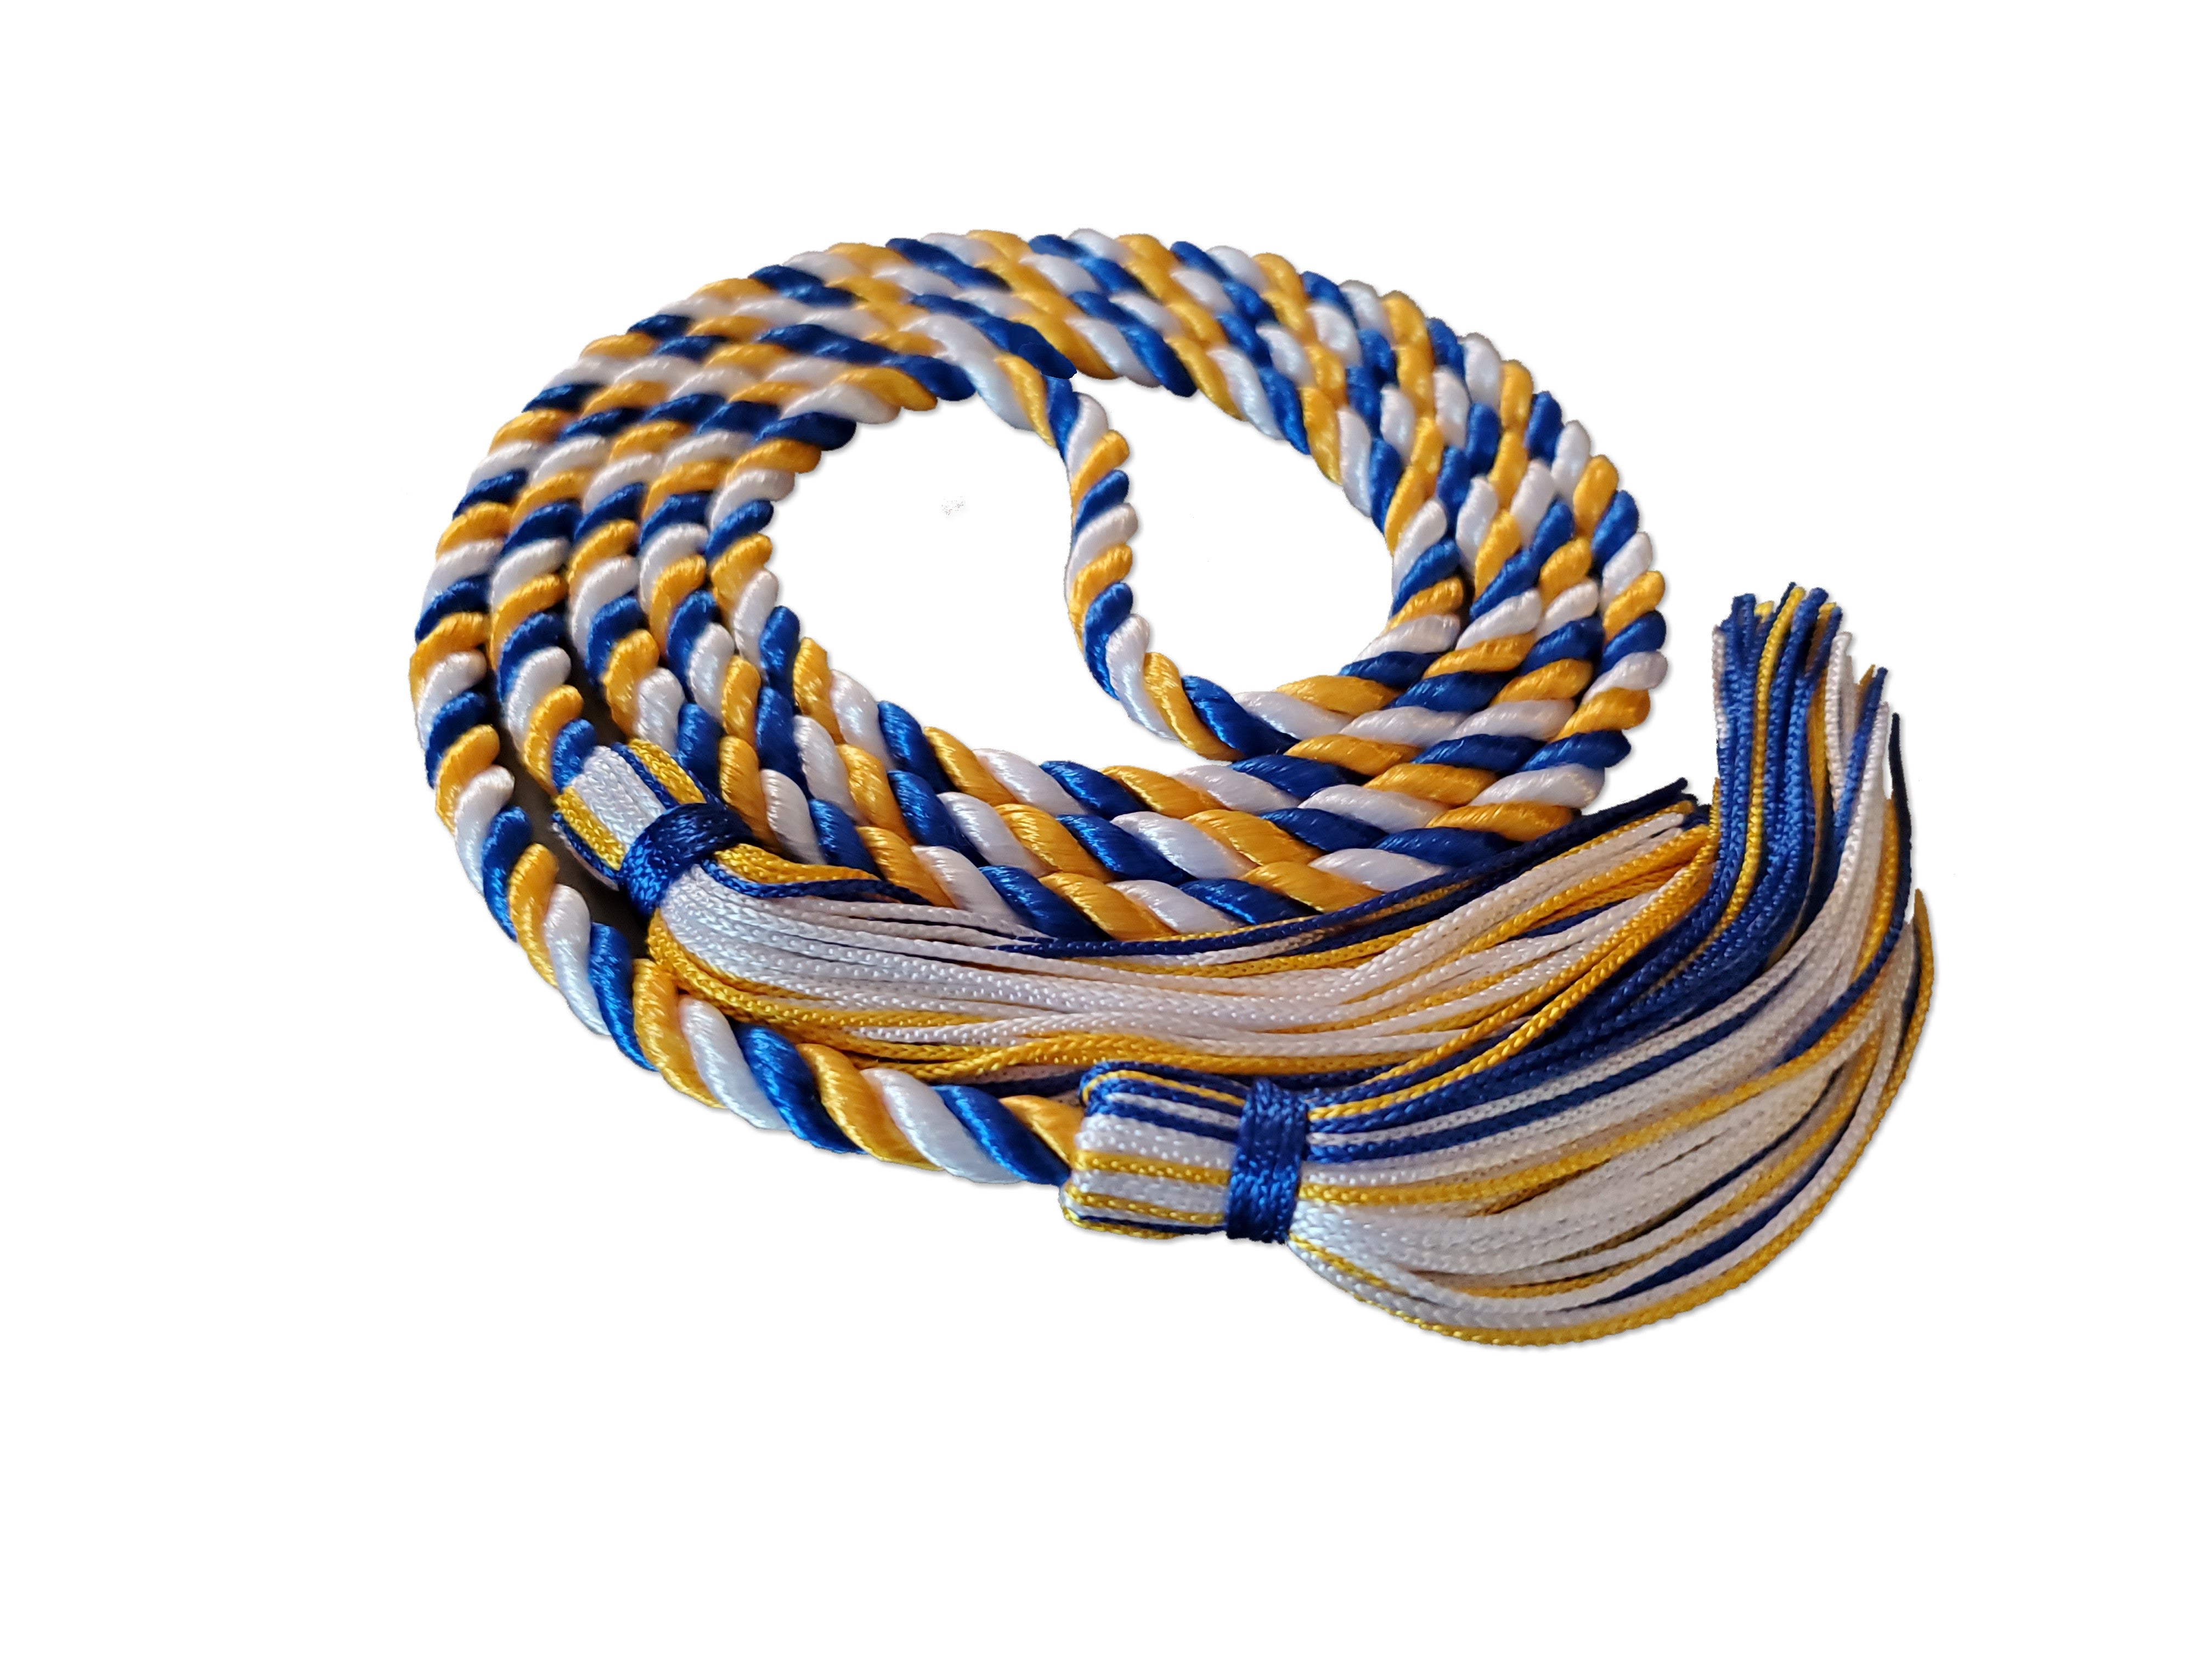 Honor Cords: Black-White-Light Blue, Senior Class Graduation Products